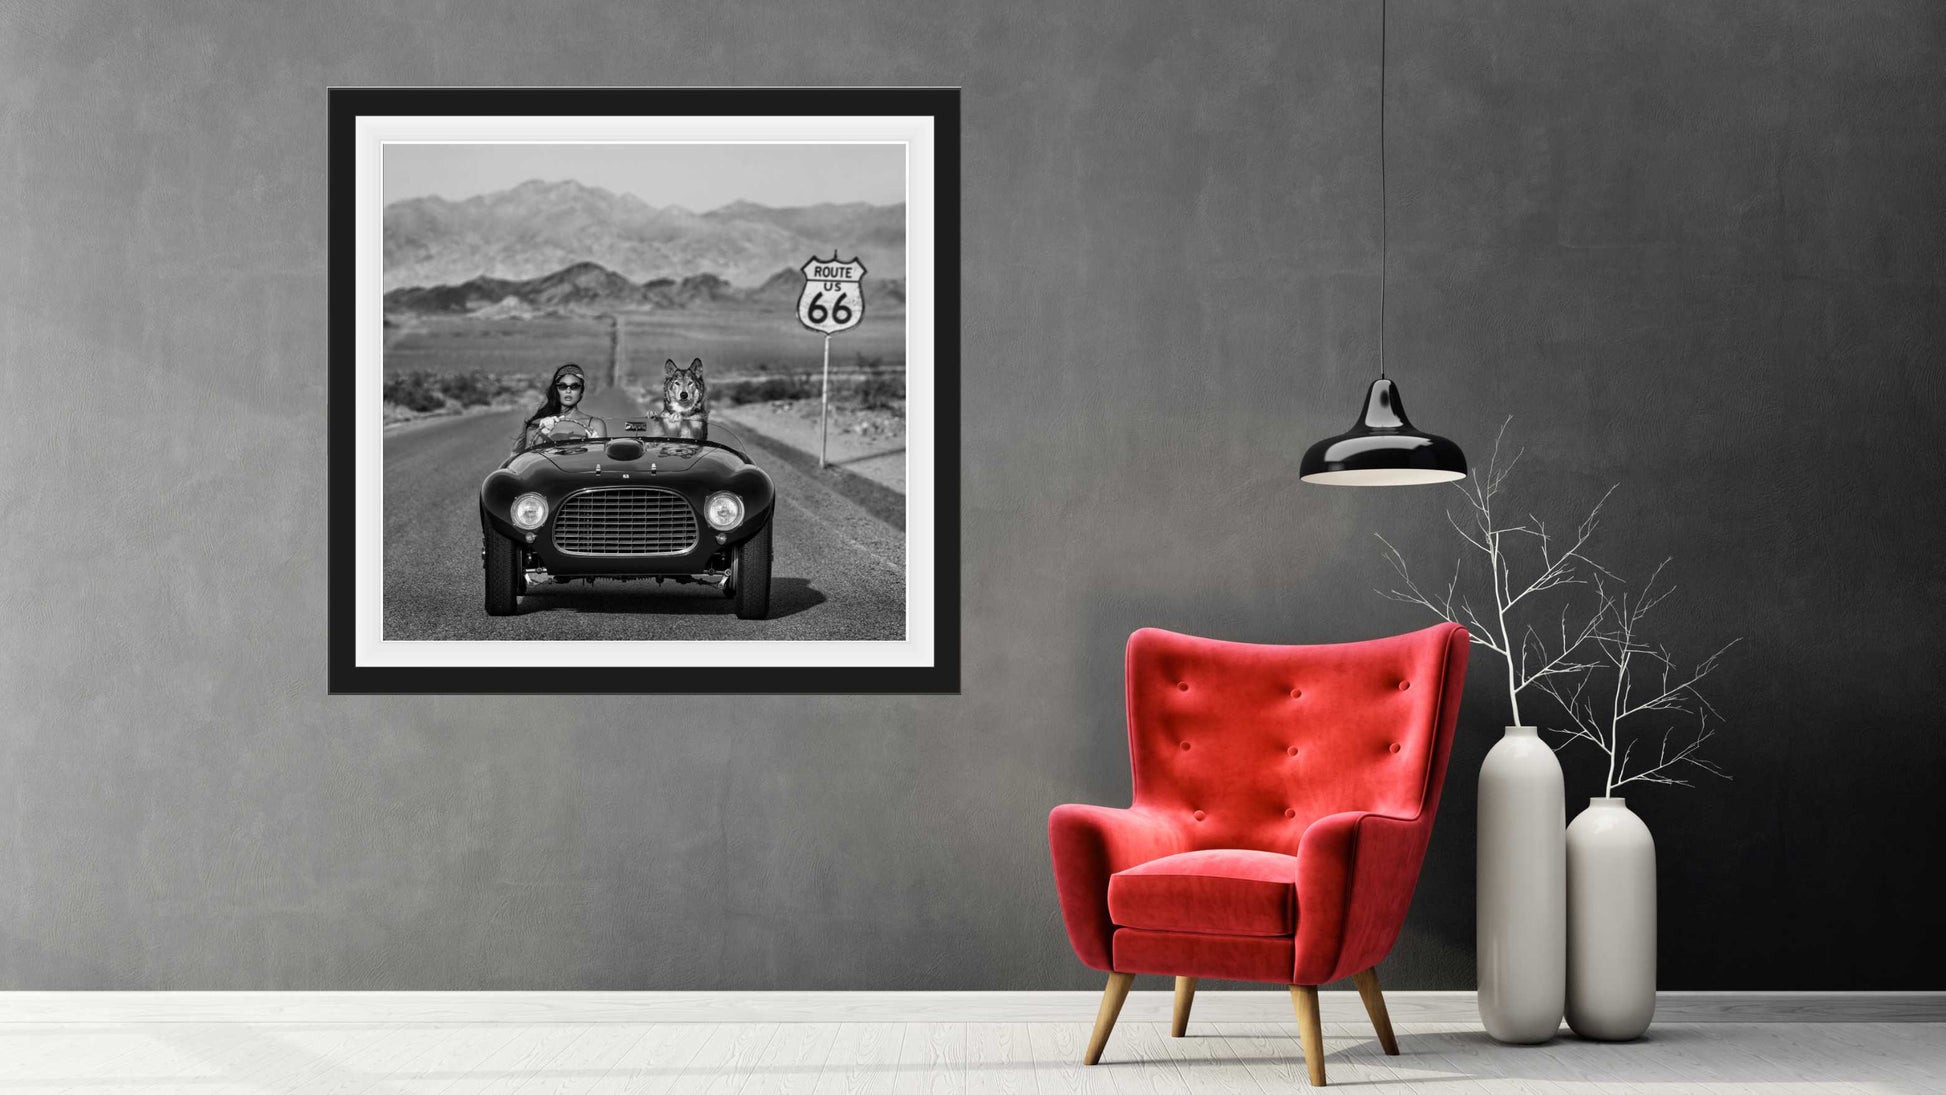 Ferrari-Photographic Print-David Yarrow-Sorrel Sky Gallery